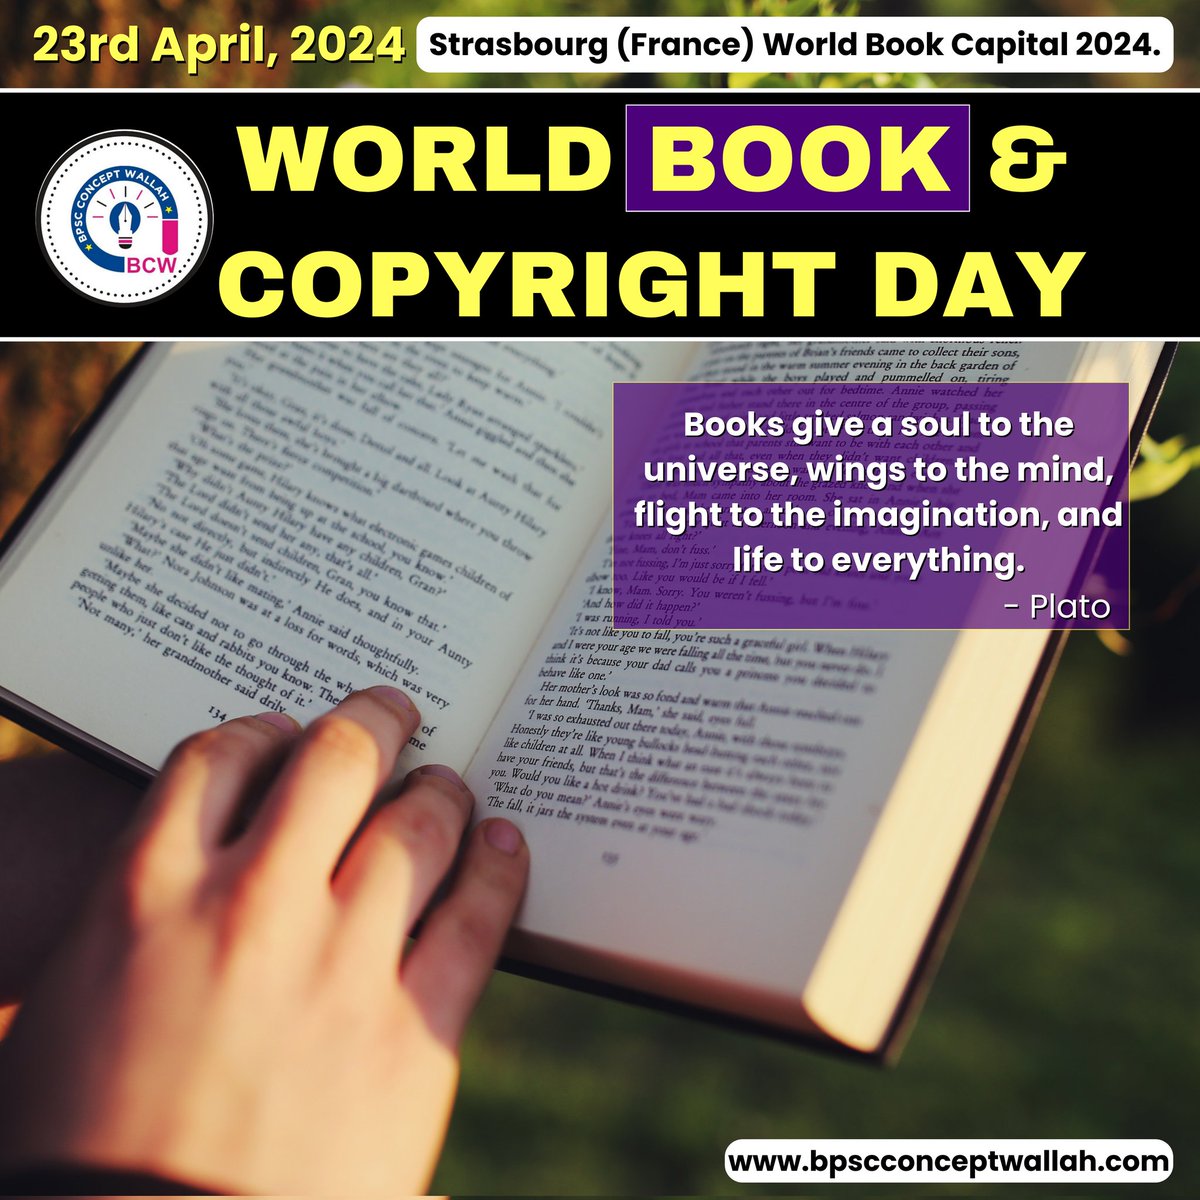 World Book & Copyright Day 2024
#WorldBookDay #bpscconceptwallah #70thbpsc #bcw #sahchar